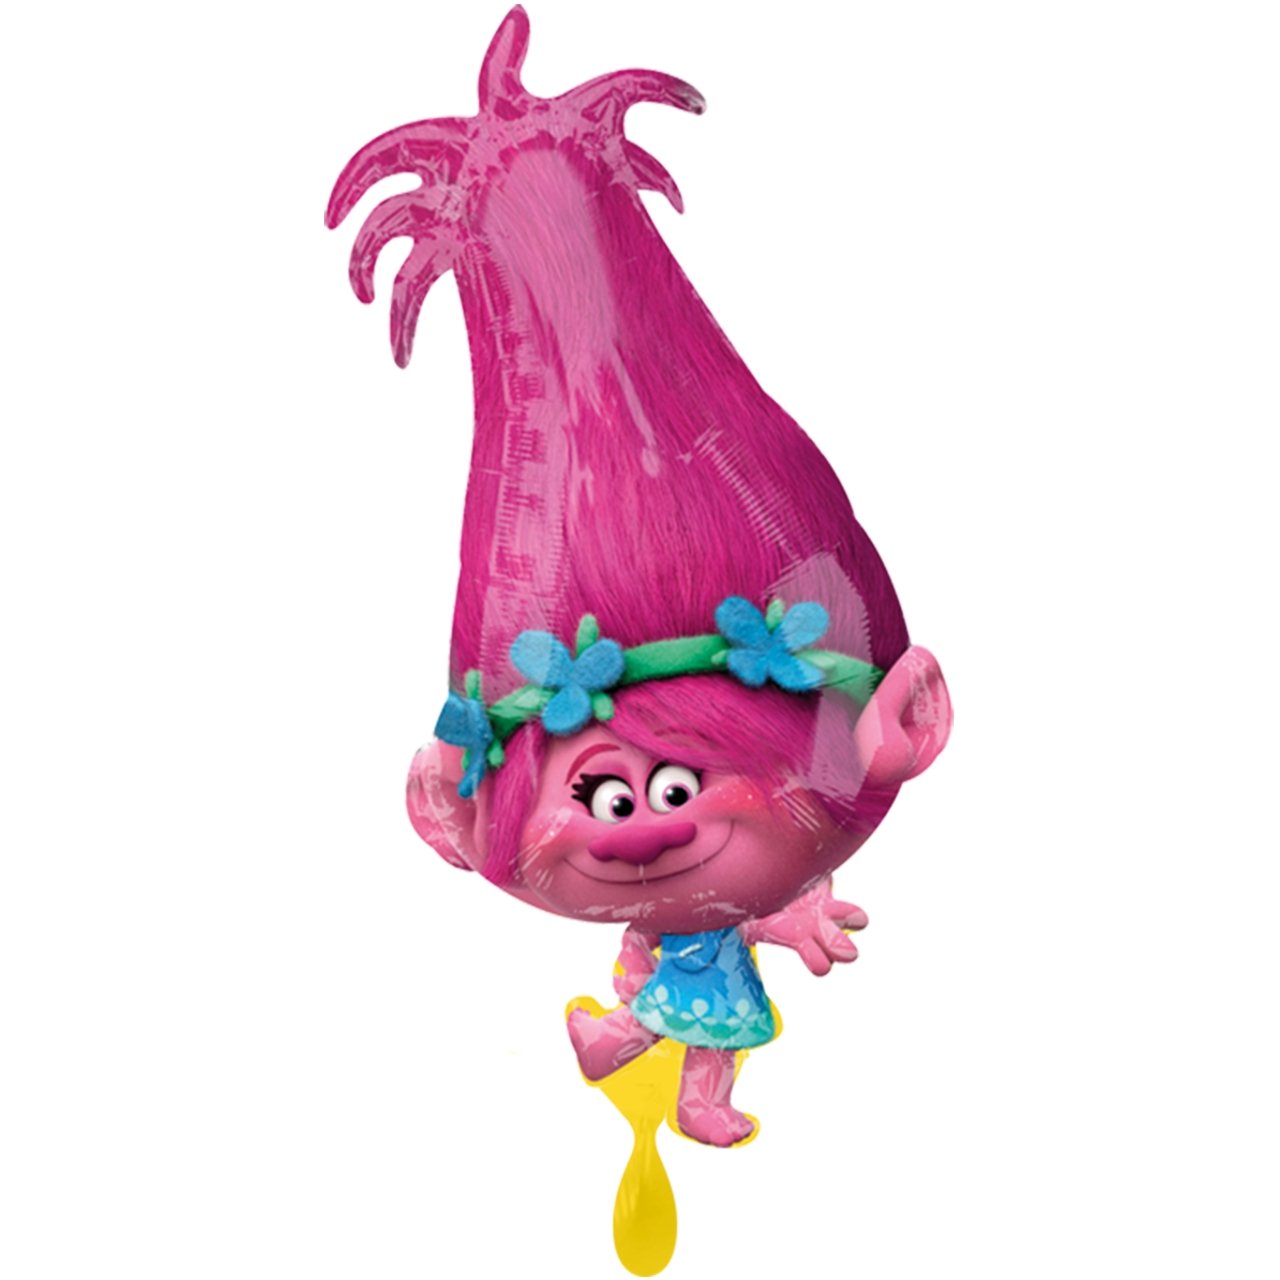 XXL Folienballon "Trolls Poppy" 78cm - Party im Karton